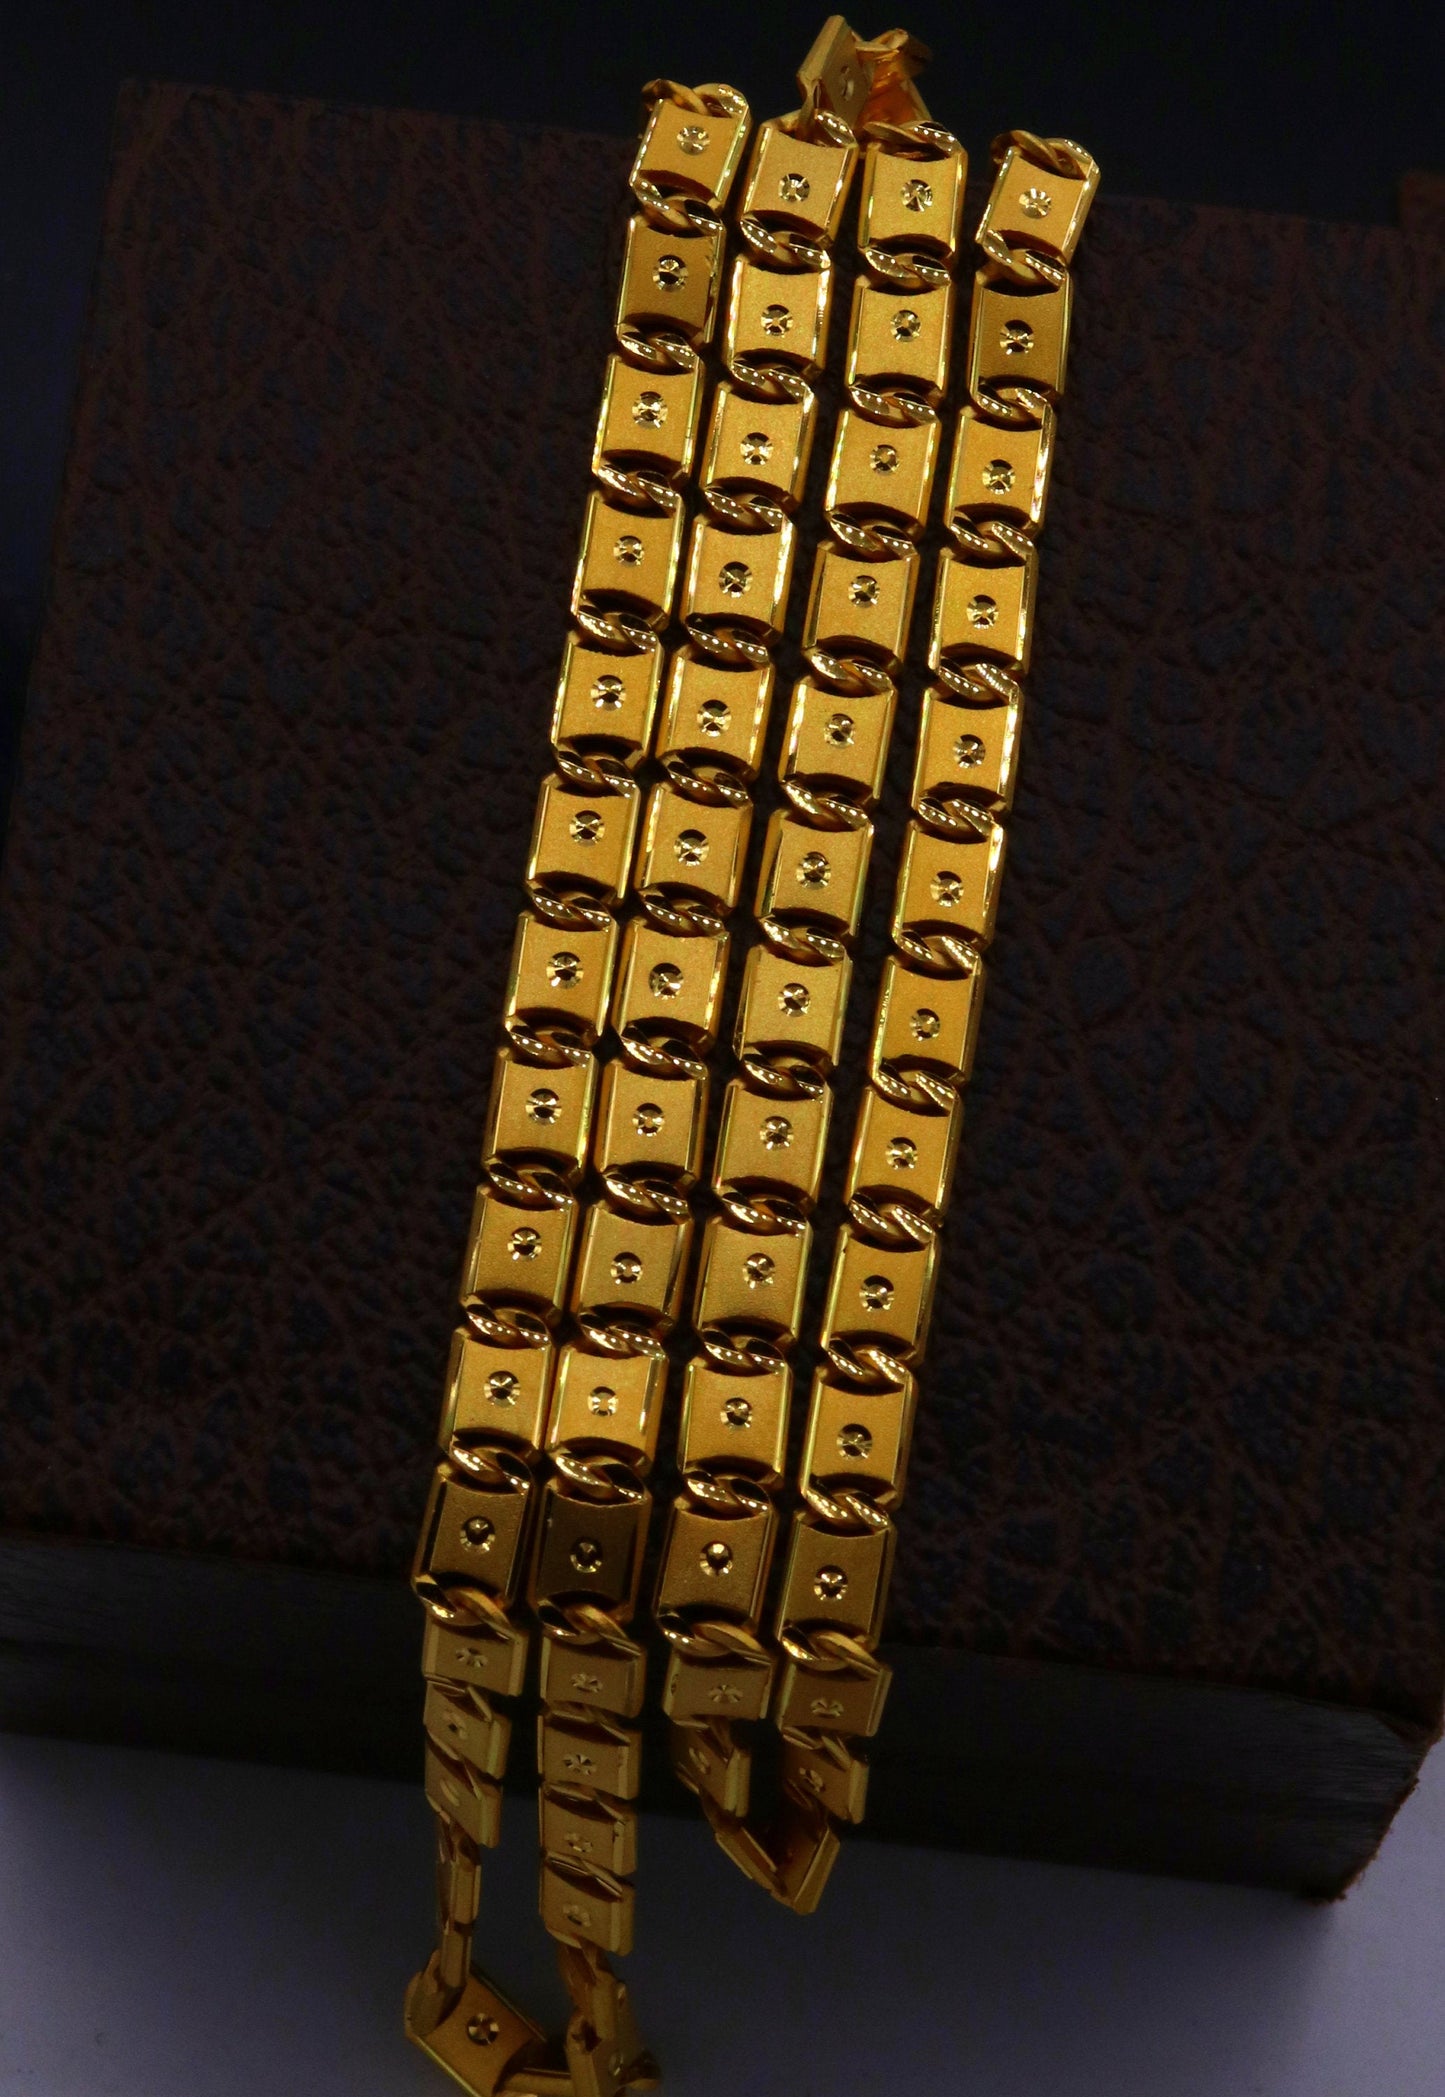 91.6% Gold chain Indian Handmade 22karat yellow gold fabulous nawabi chain men's women's necklace 20 inches unisex designer jewelry - TRIBAL ORNAMENTS